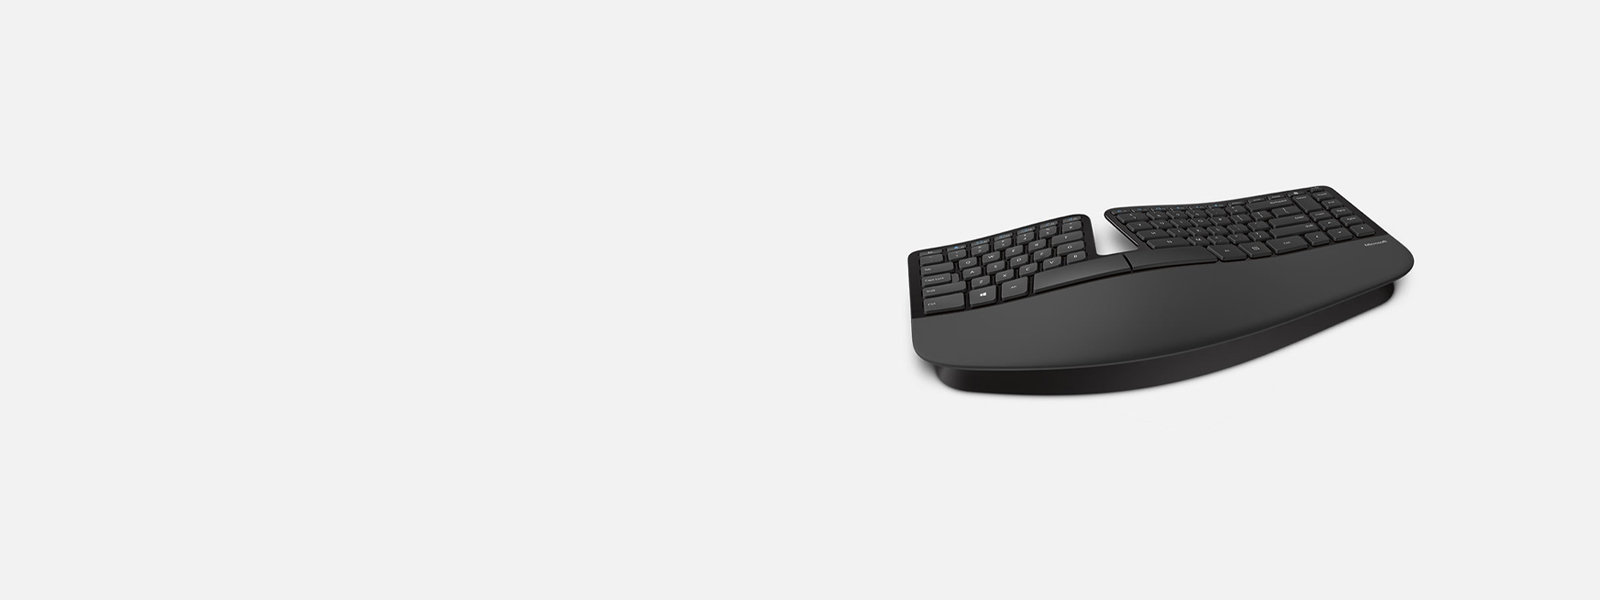 Sculpt Ergonomic Keyboard for Business Accessories | Business Microsoft